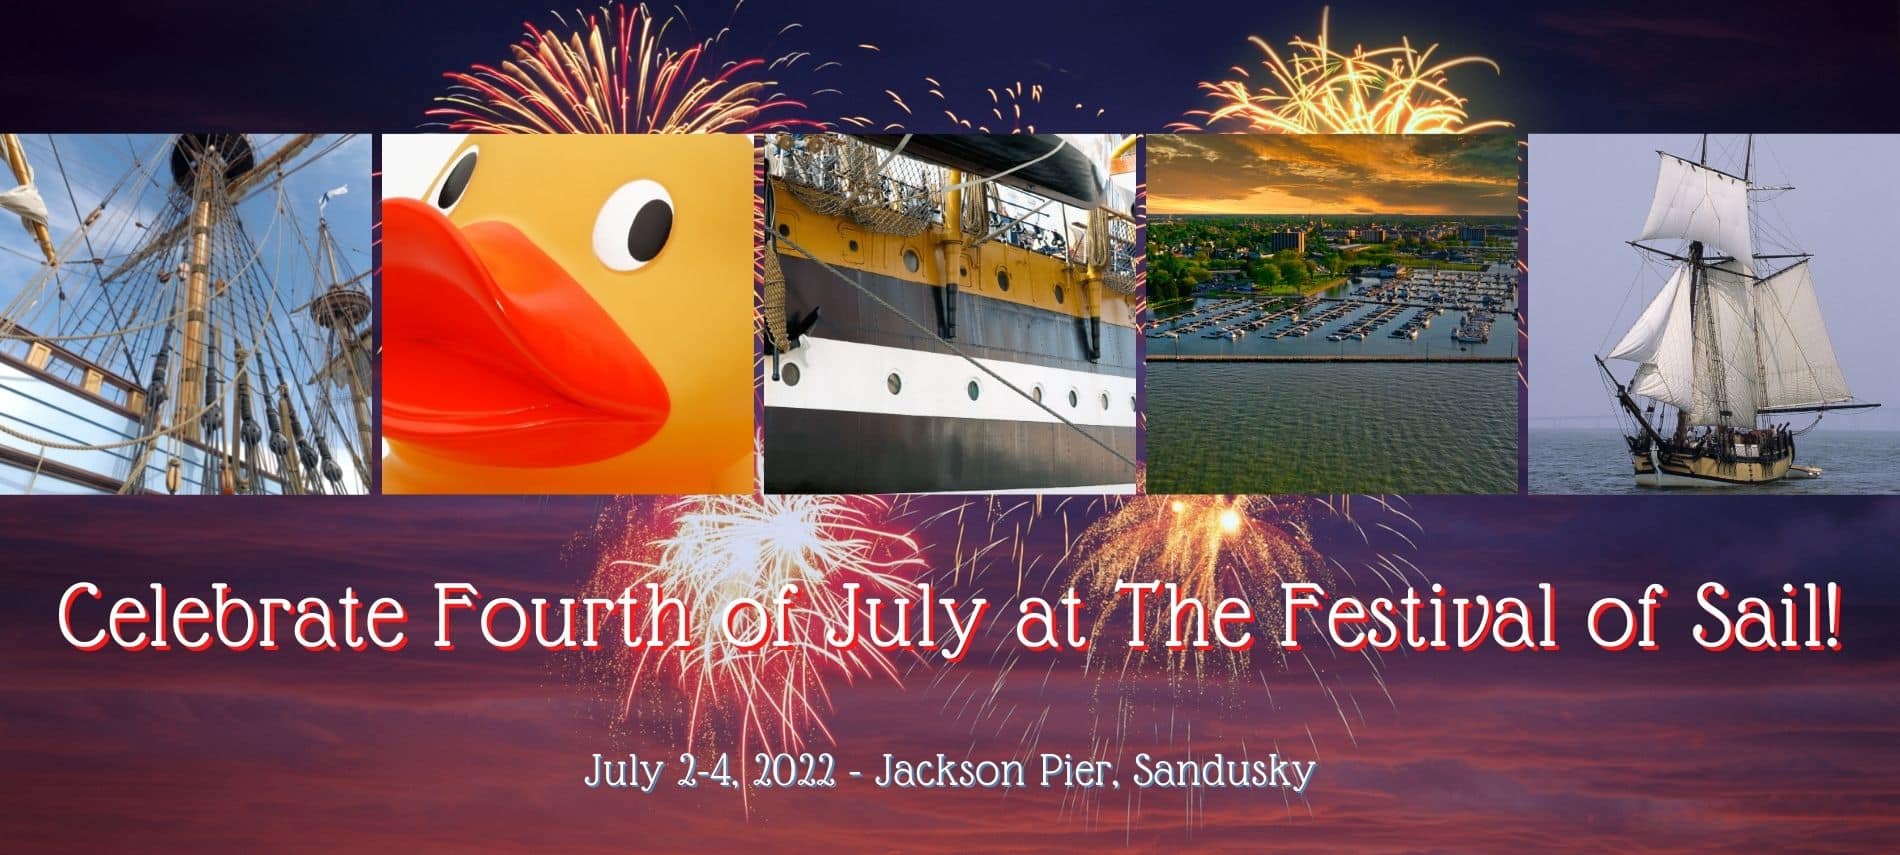 Festival of Sail at Sandusky Harbor July 24, 2022